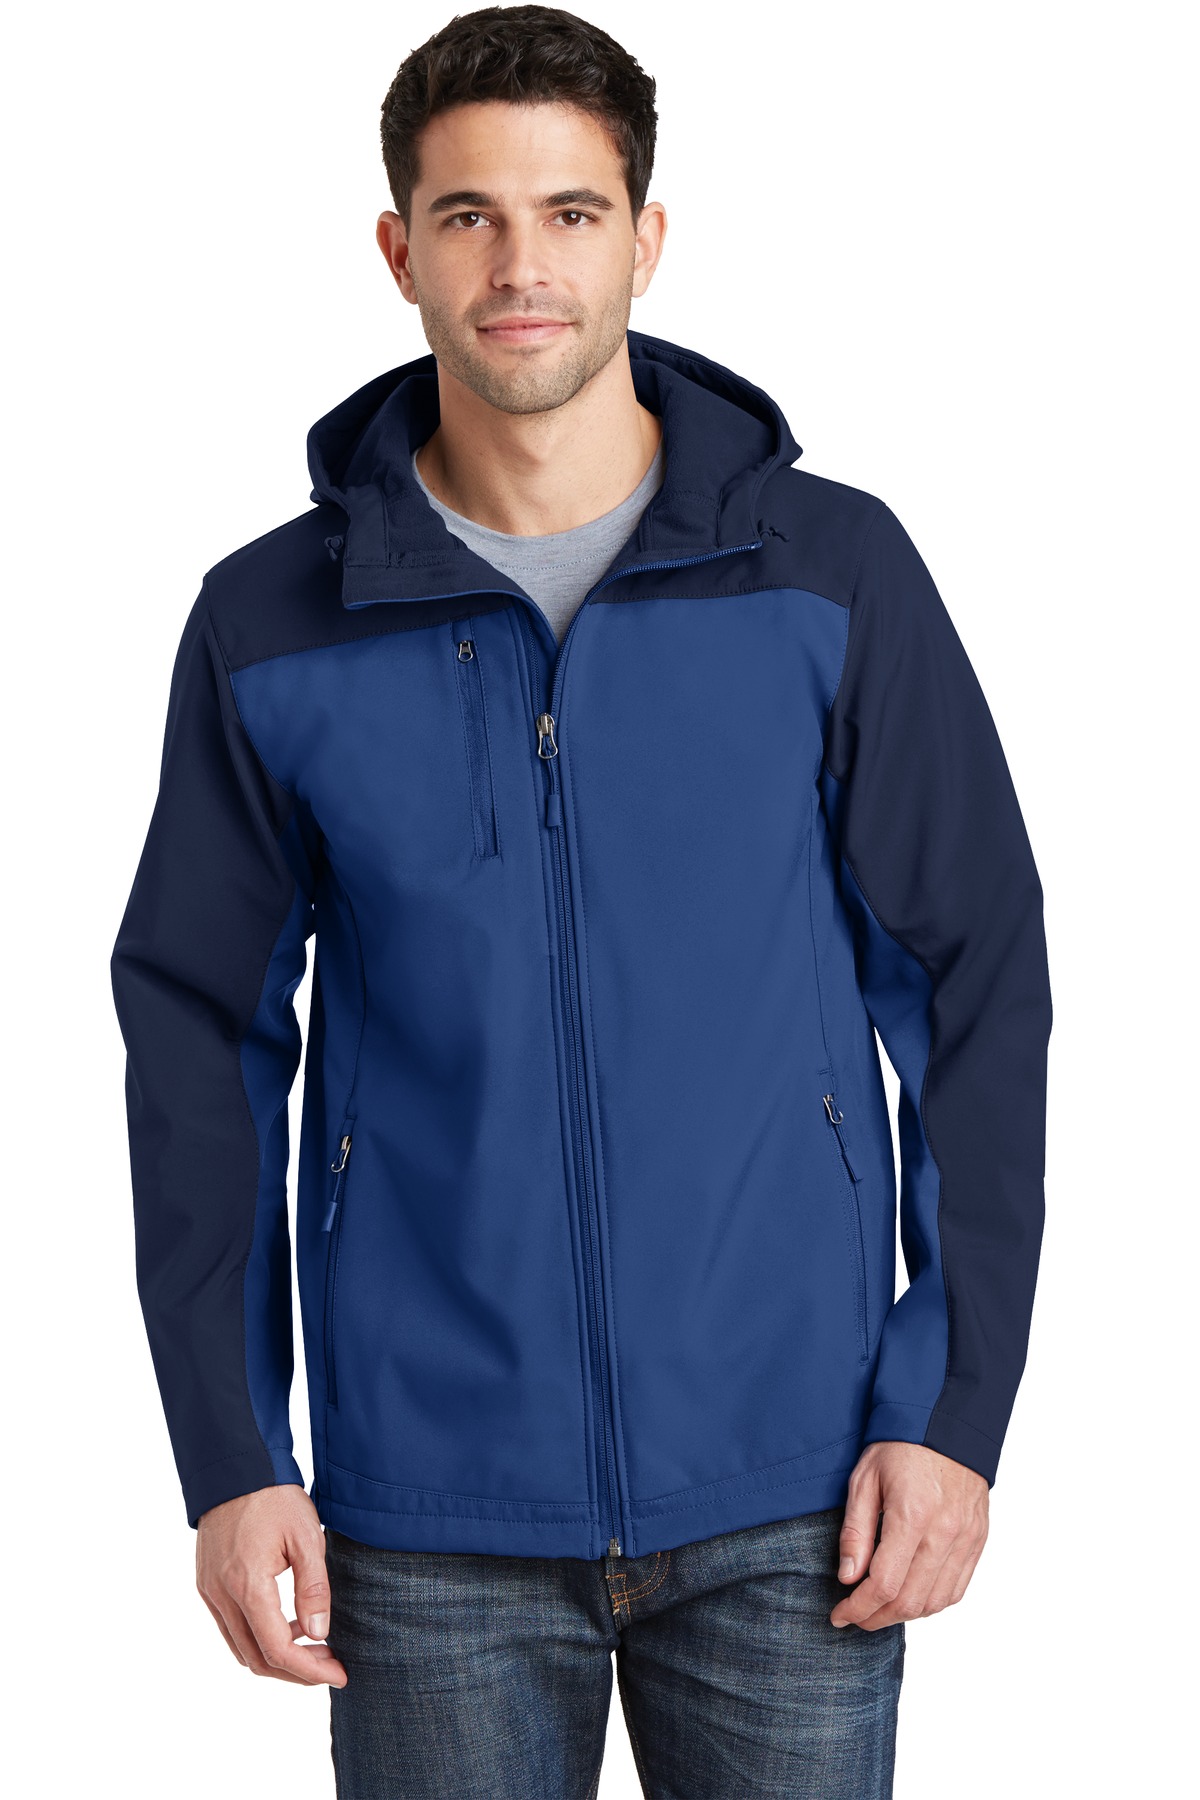 Port Authority  J335 - Hooded Core Soft Shell Jacket